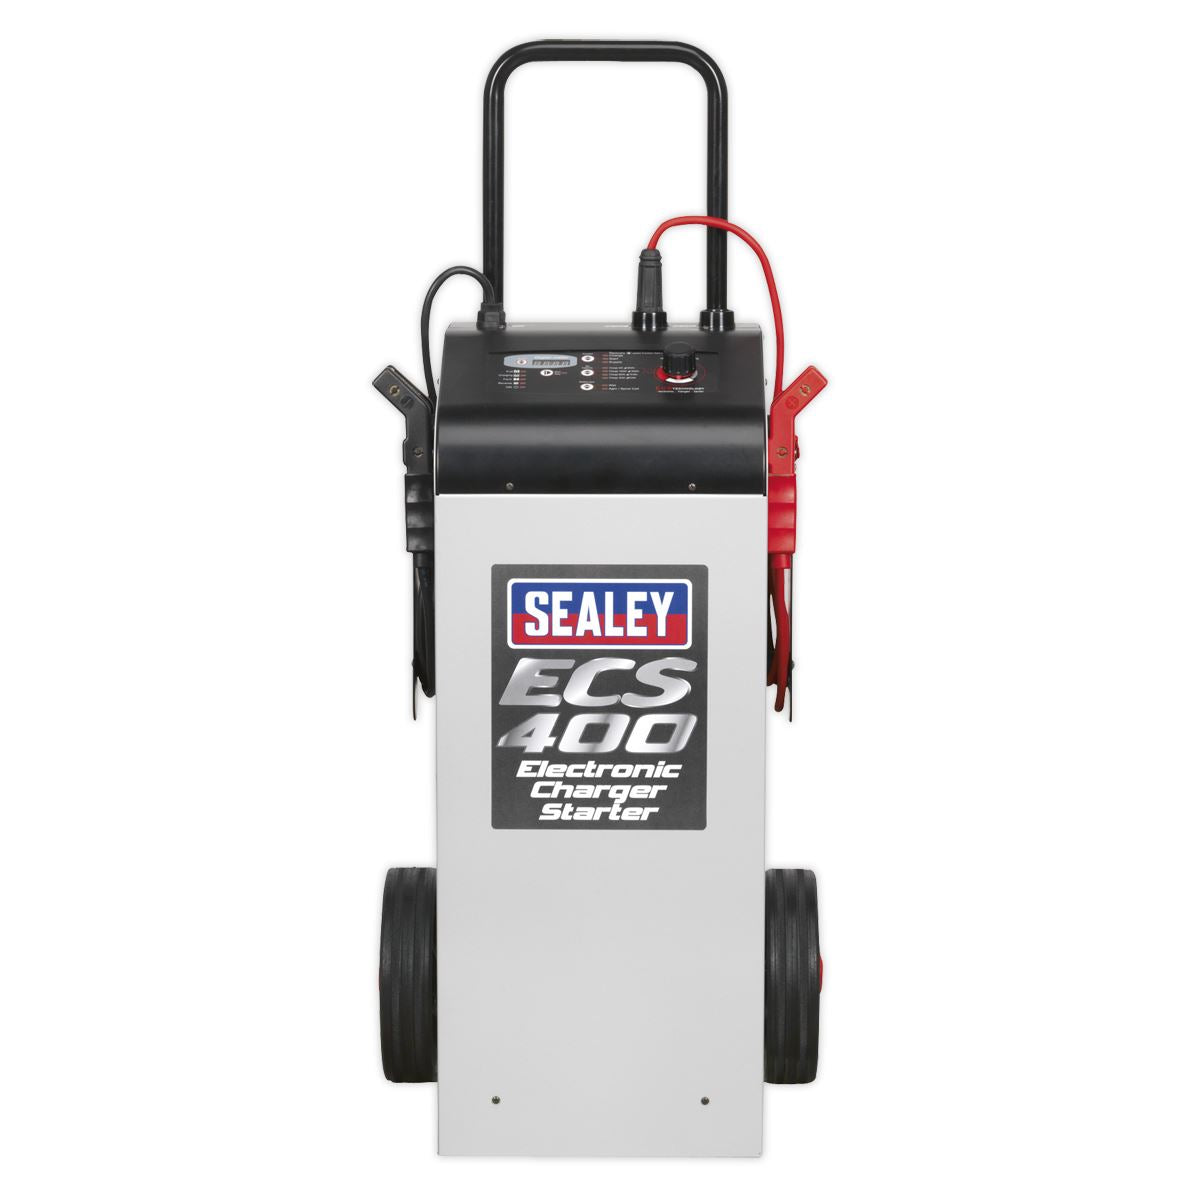 Sealey Electronic Charger Starter 75/400A 12/24V ECS400